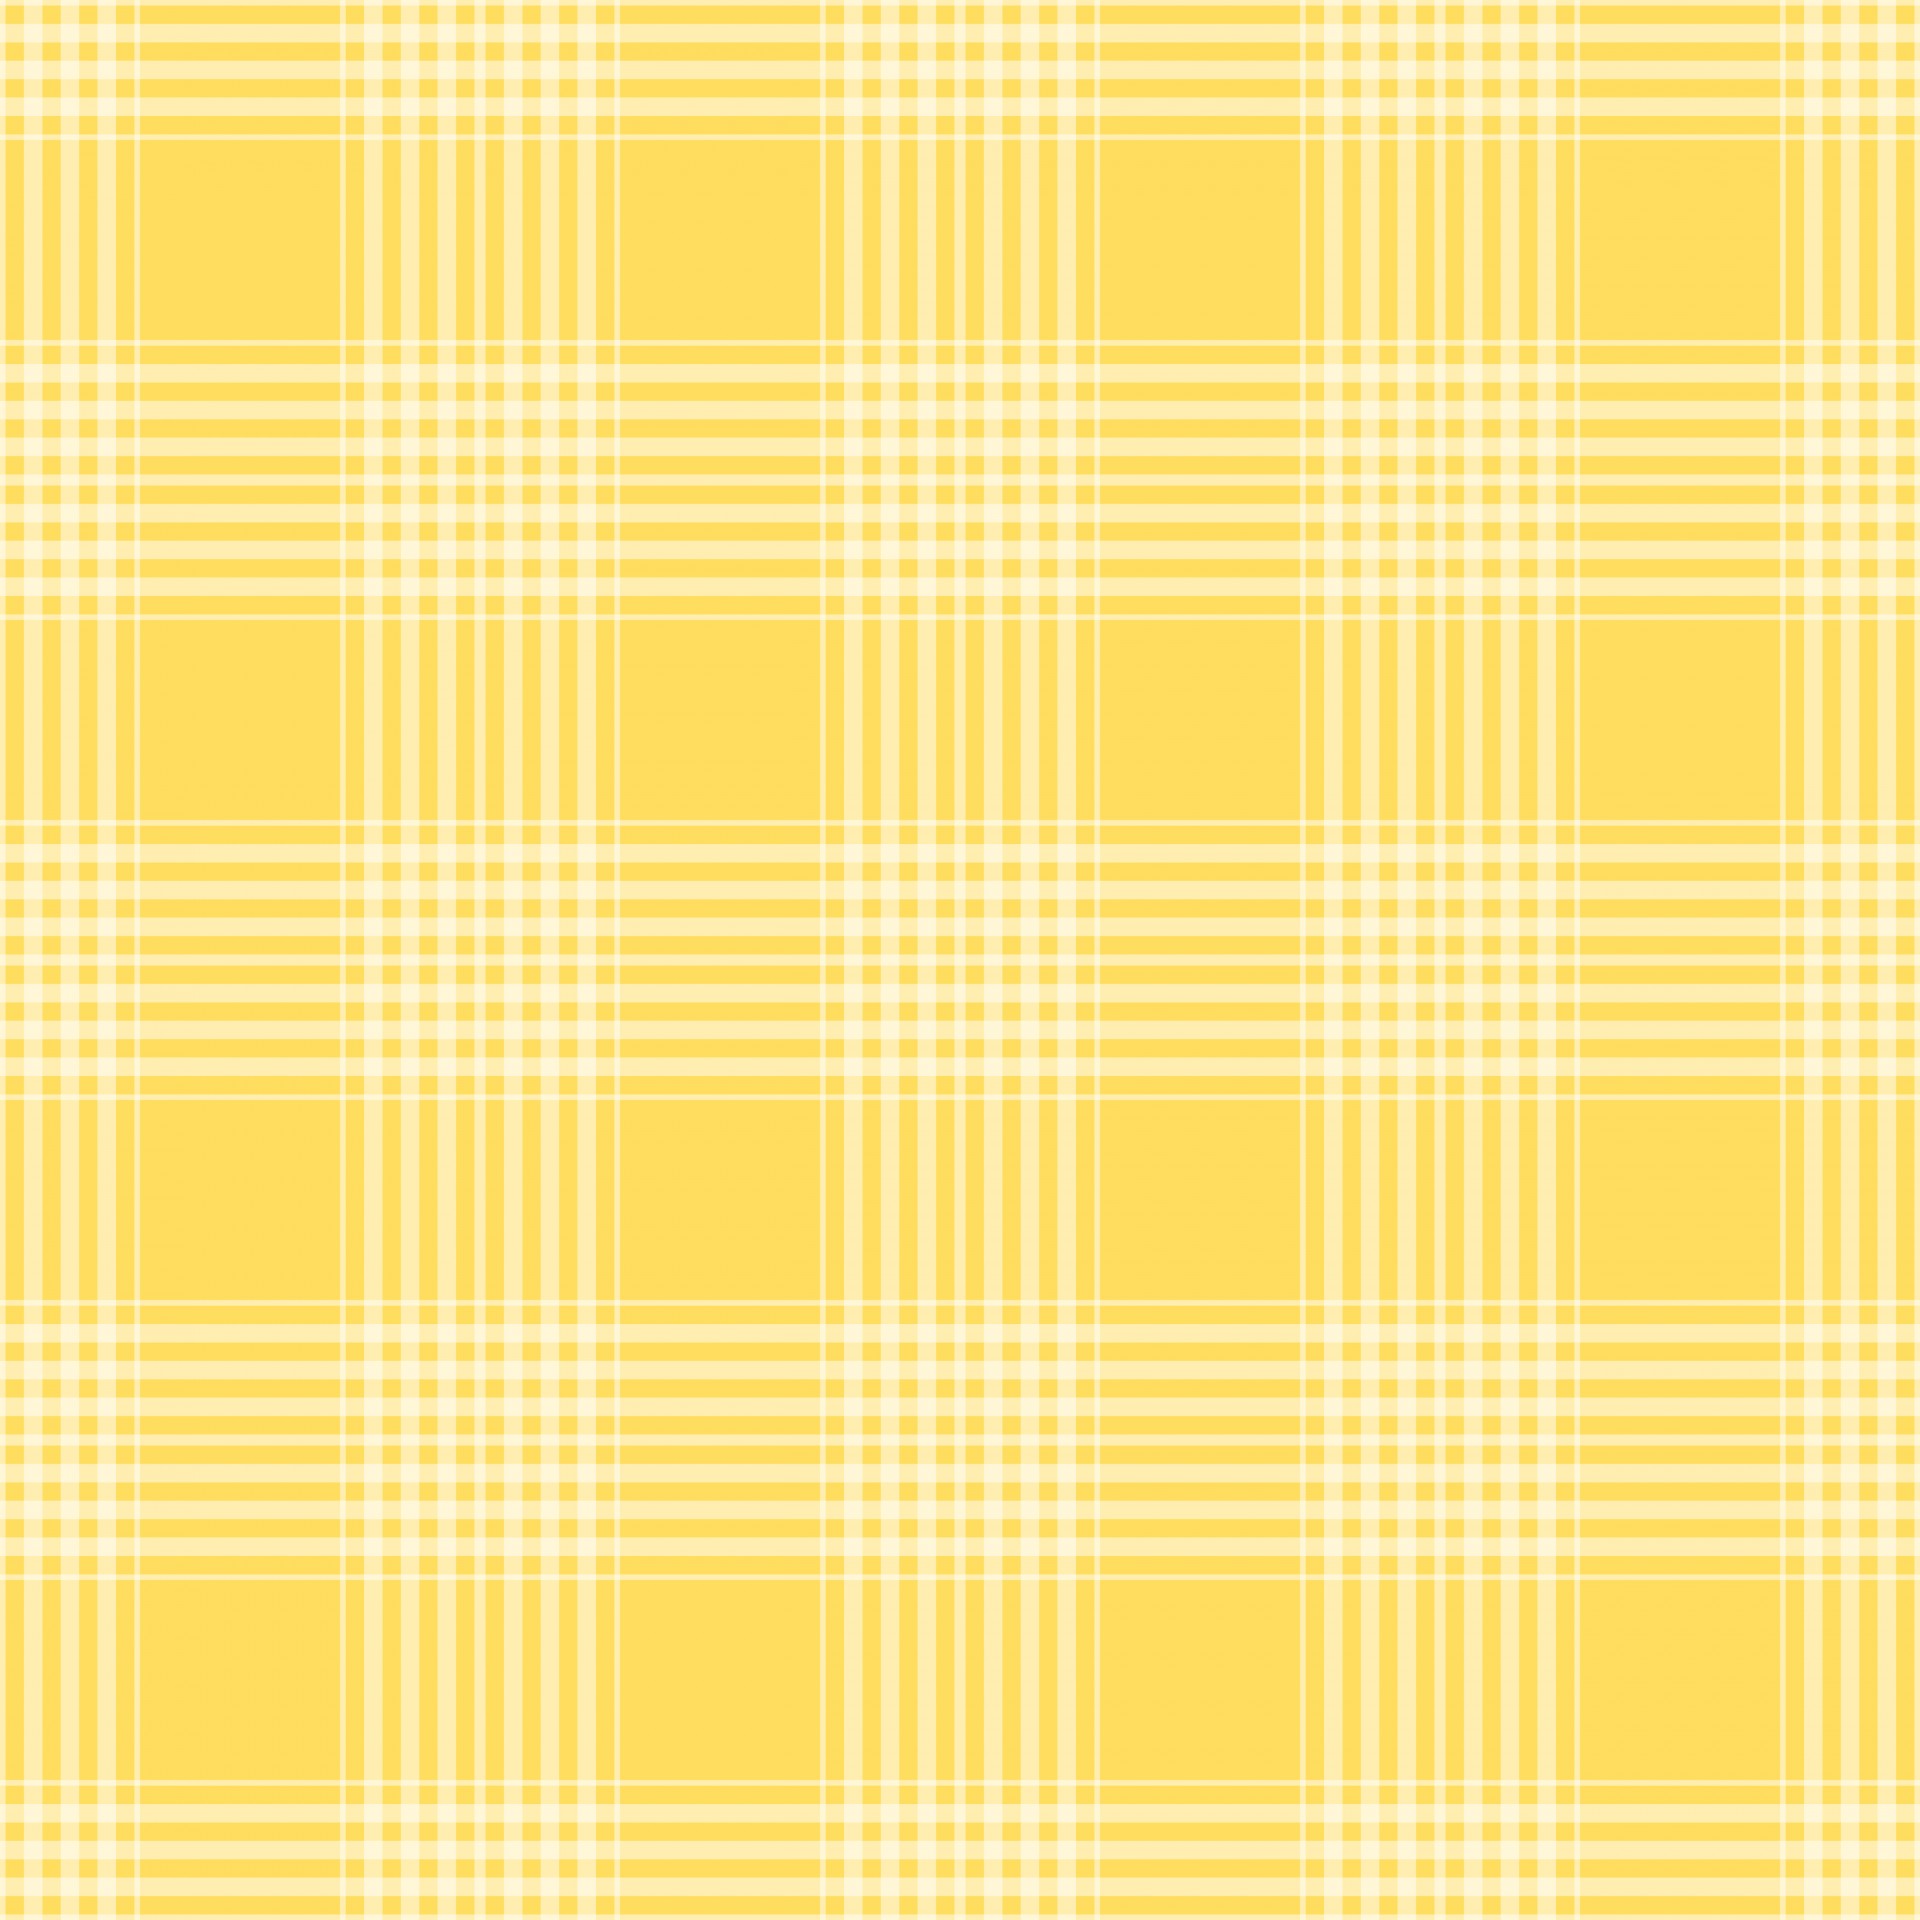 Checks,plaid,tartan,yellow,wallpaper - free image from